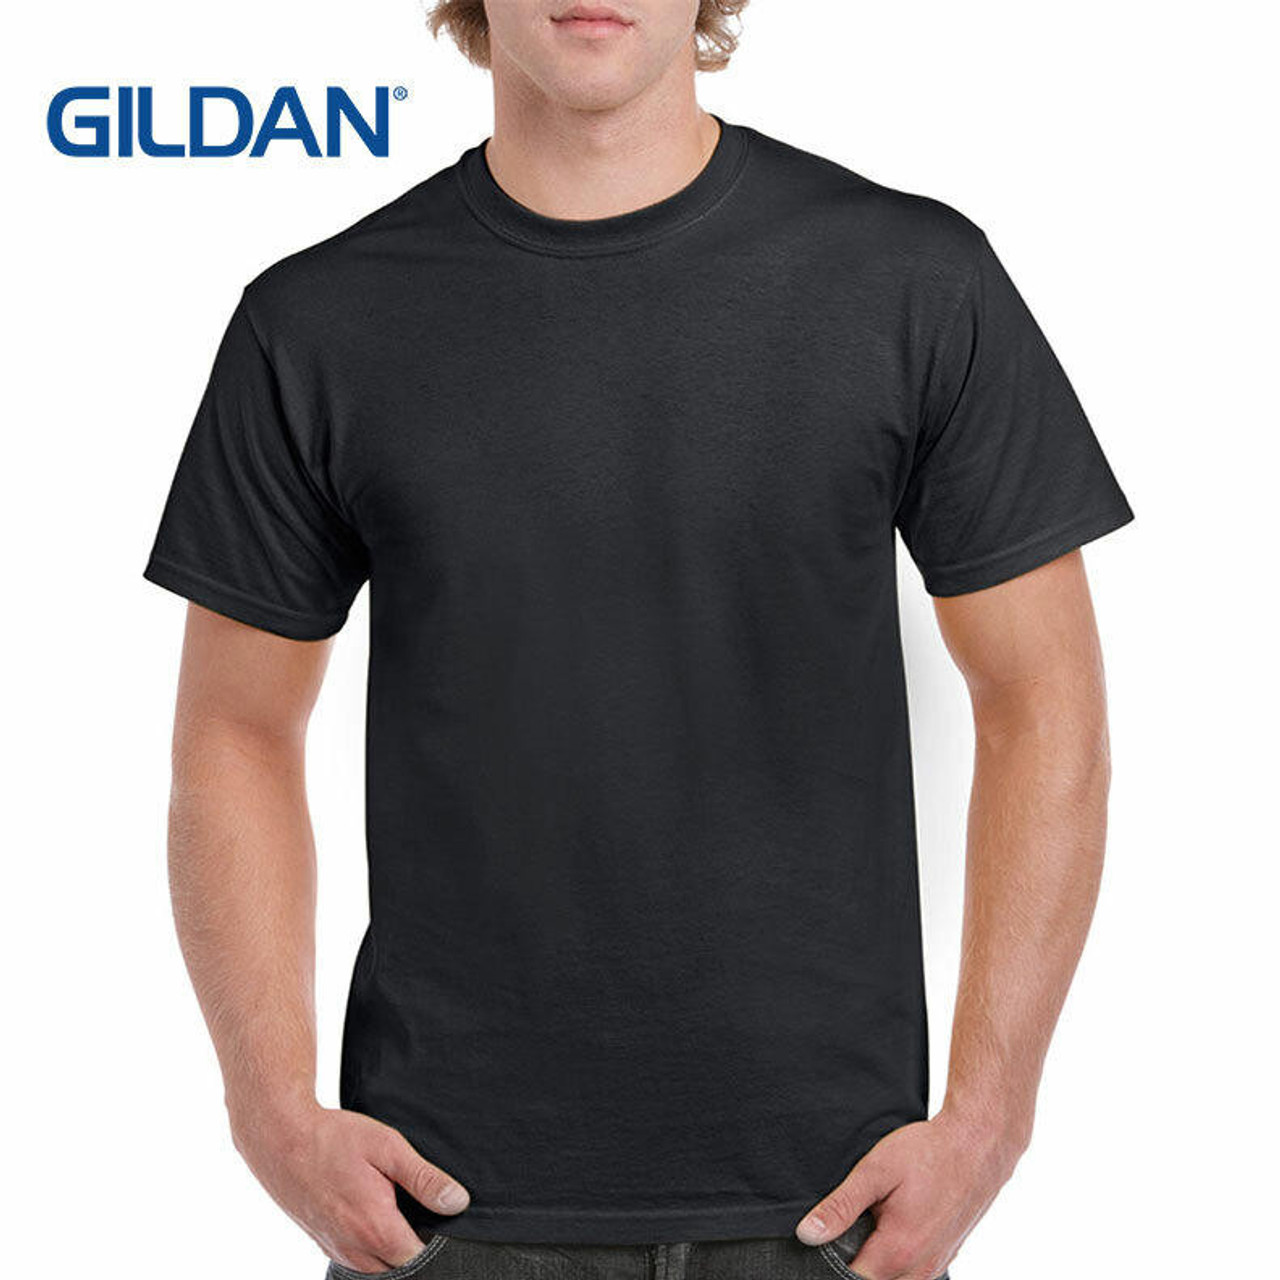 Gildan t shirt